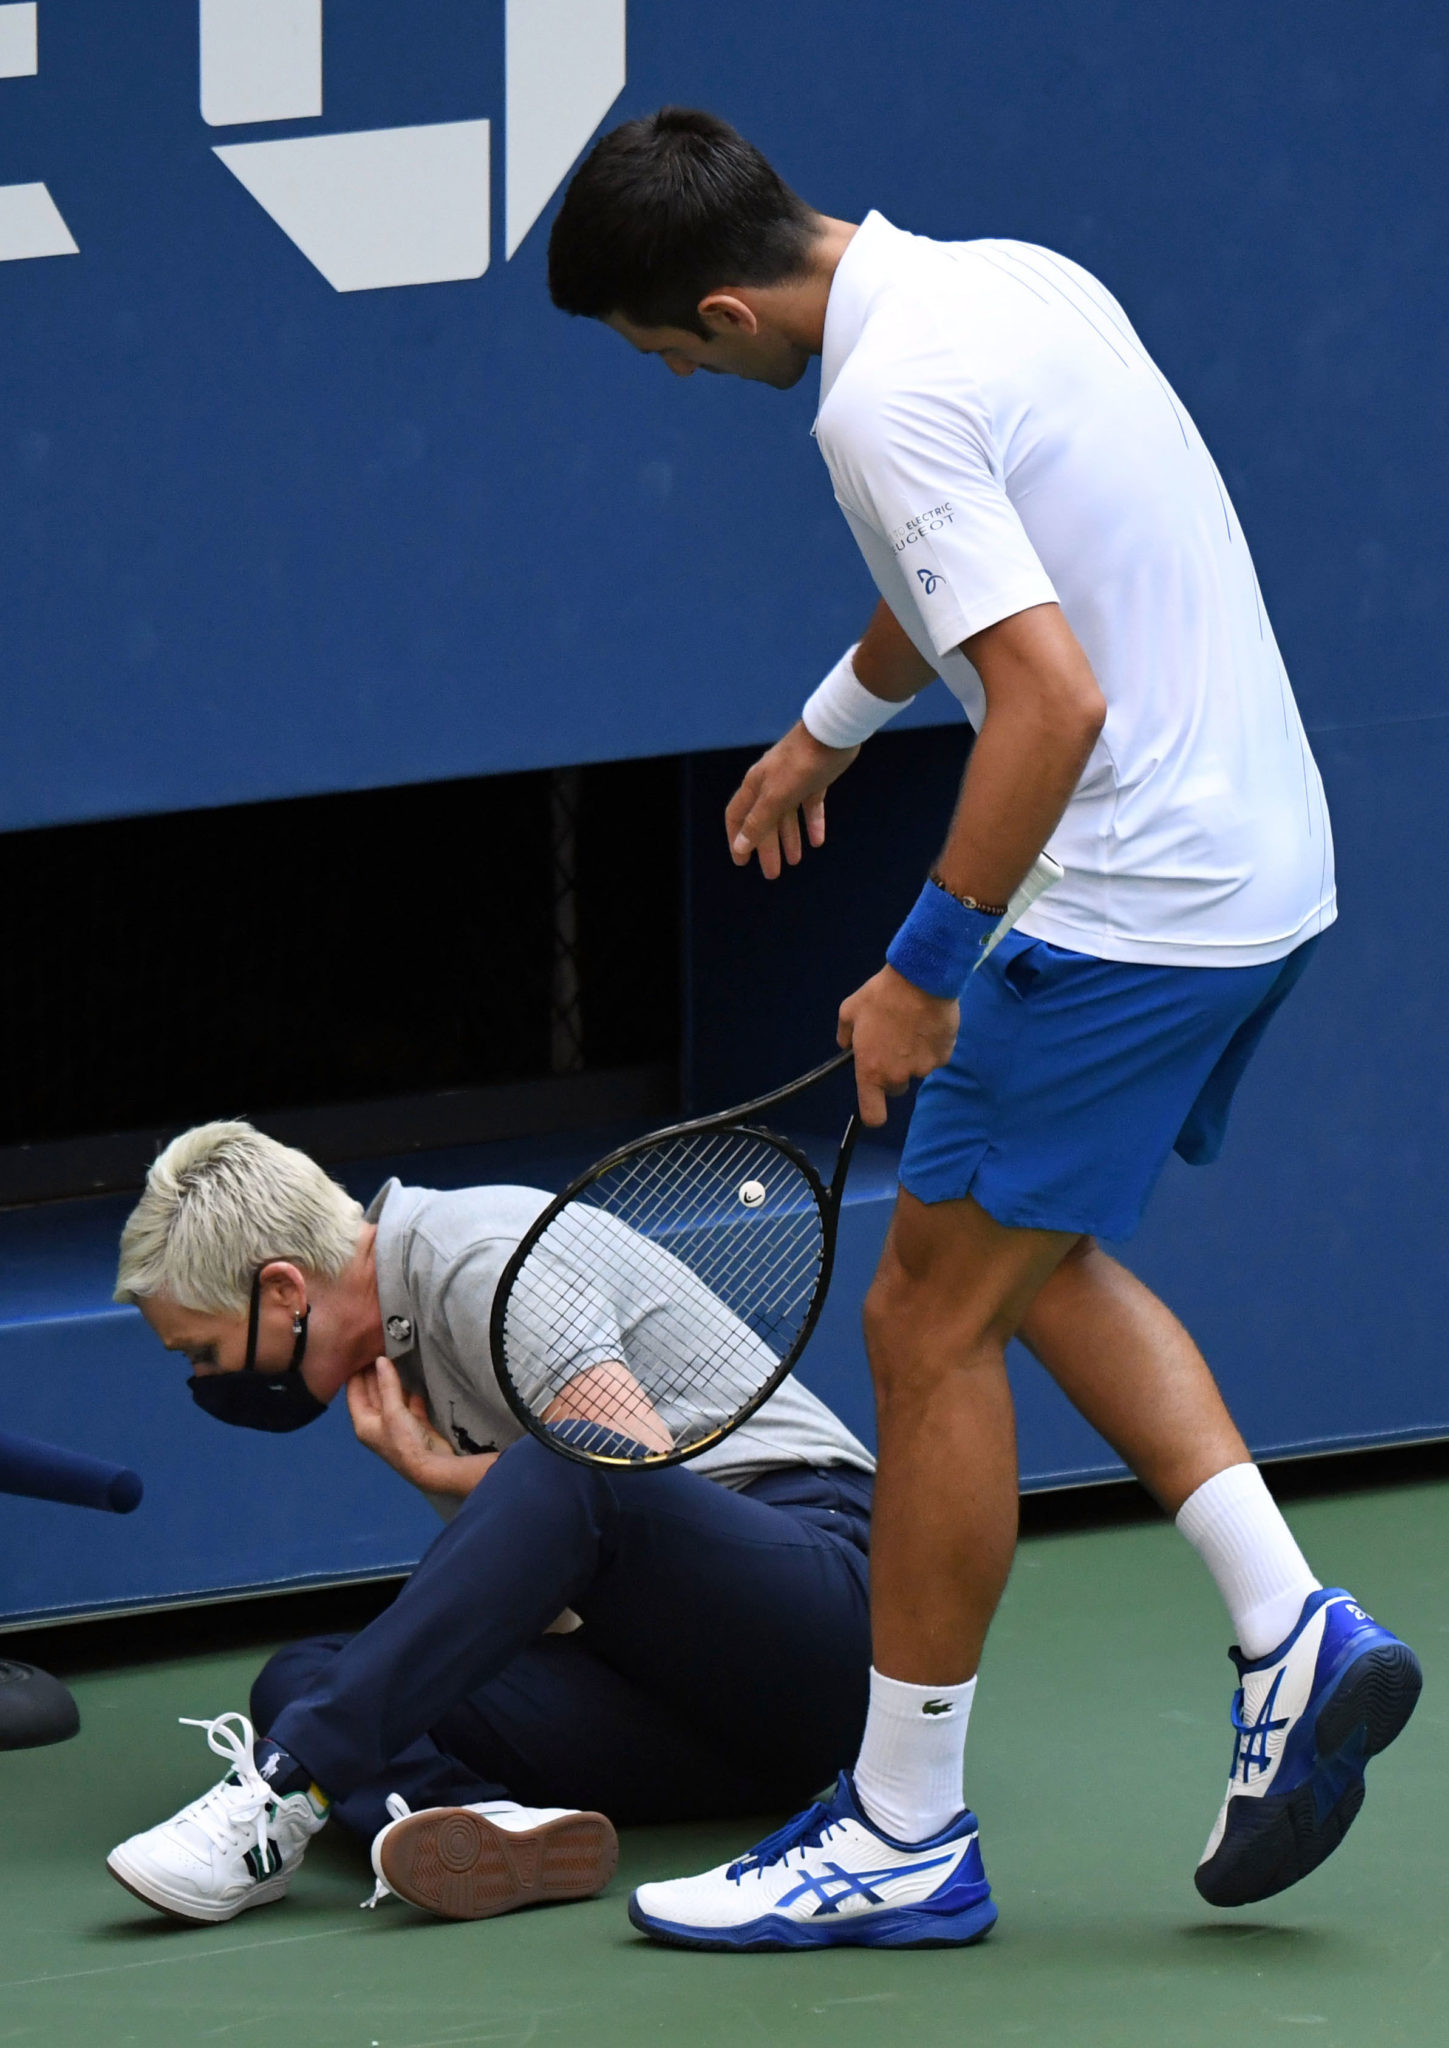 Novak Djokovic apologising to the line judge he just hit